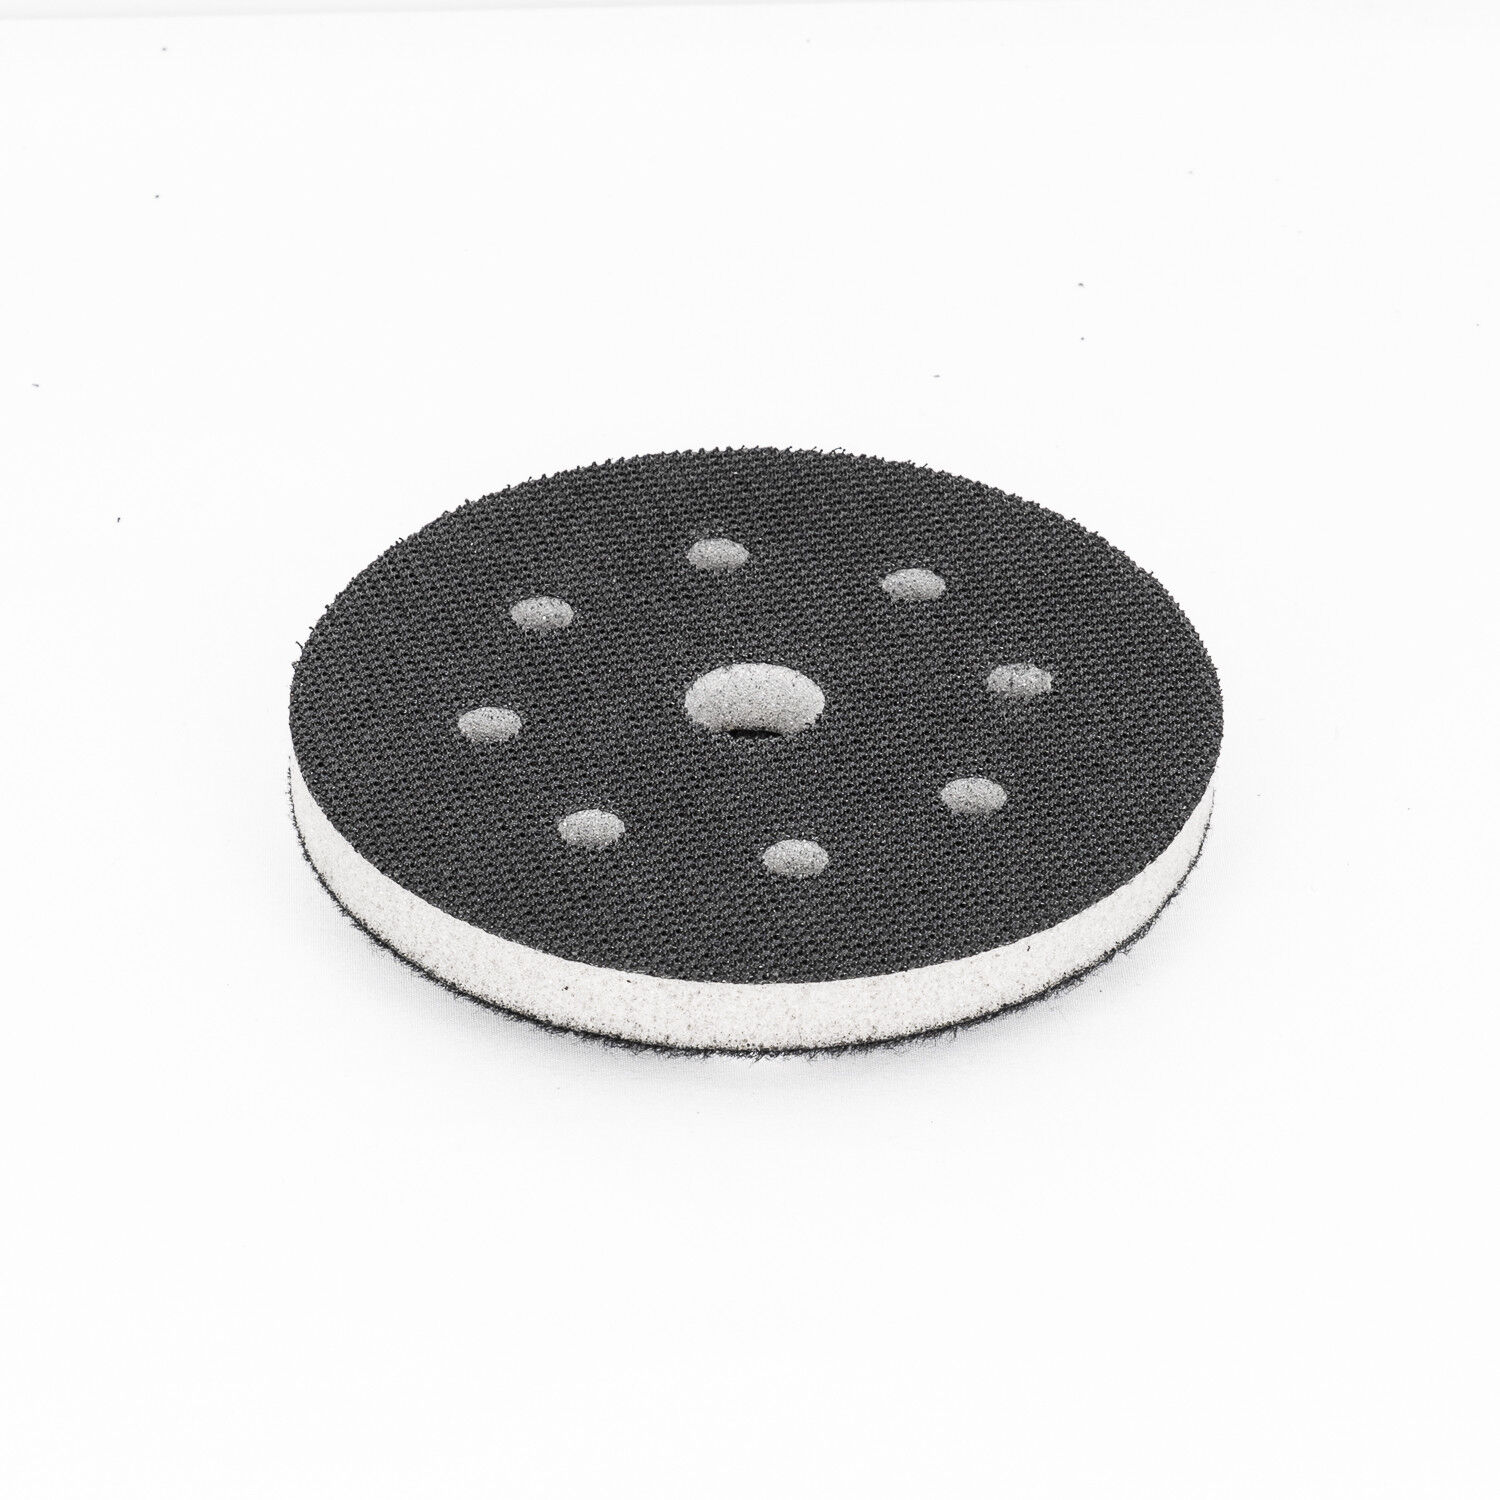 1-6''Cushion Pad Interface soft for Sanding Pad Bosch DeWalt Festool Fein Makita